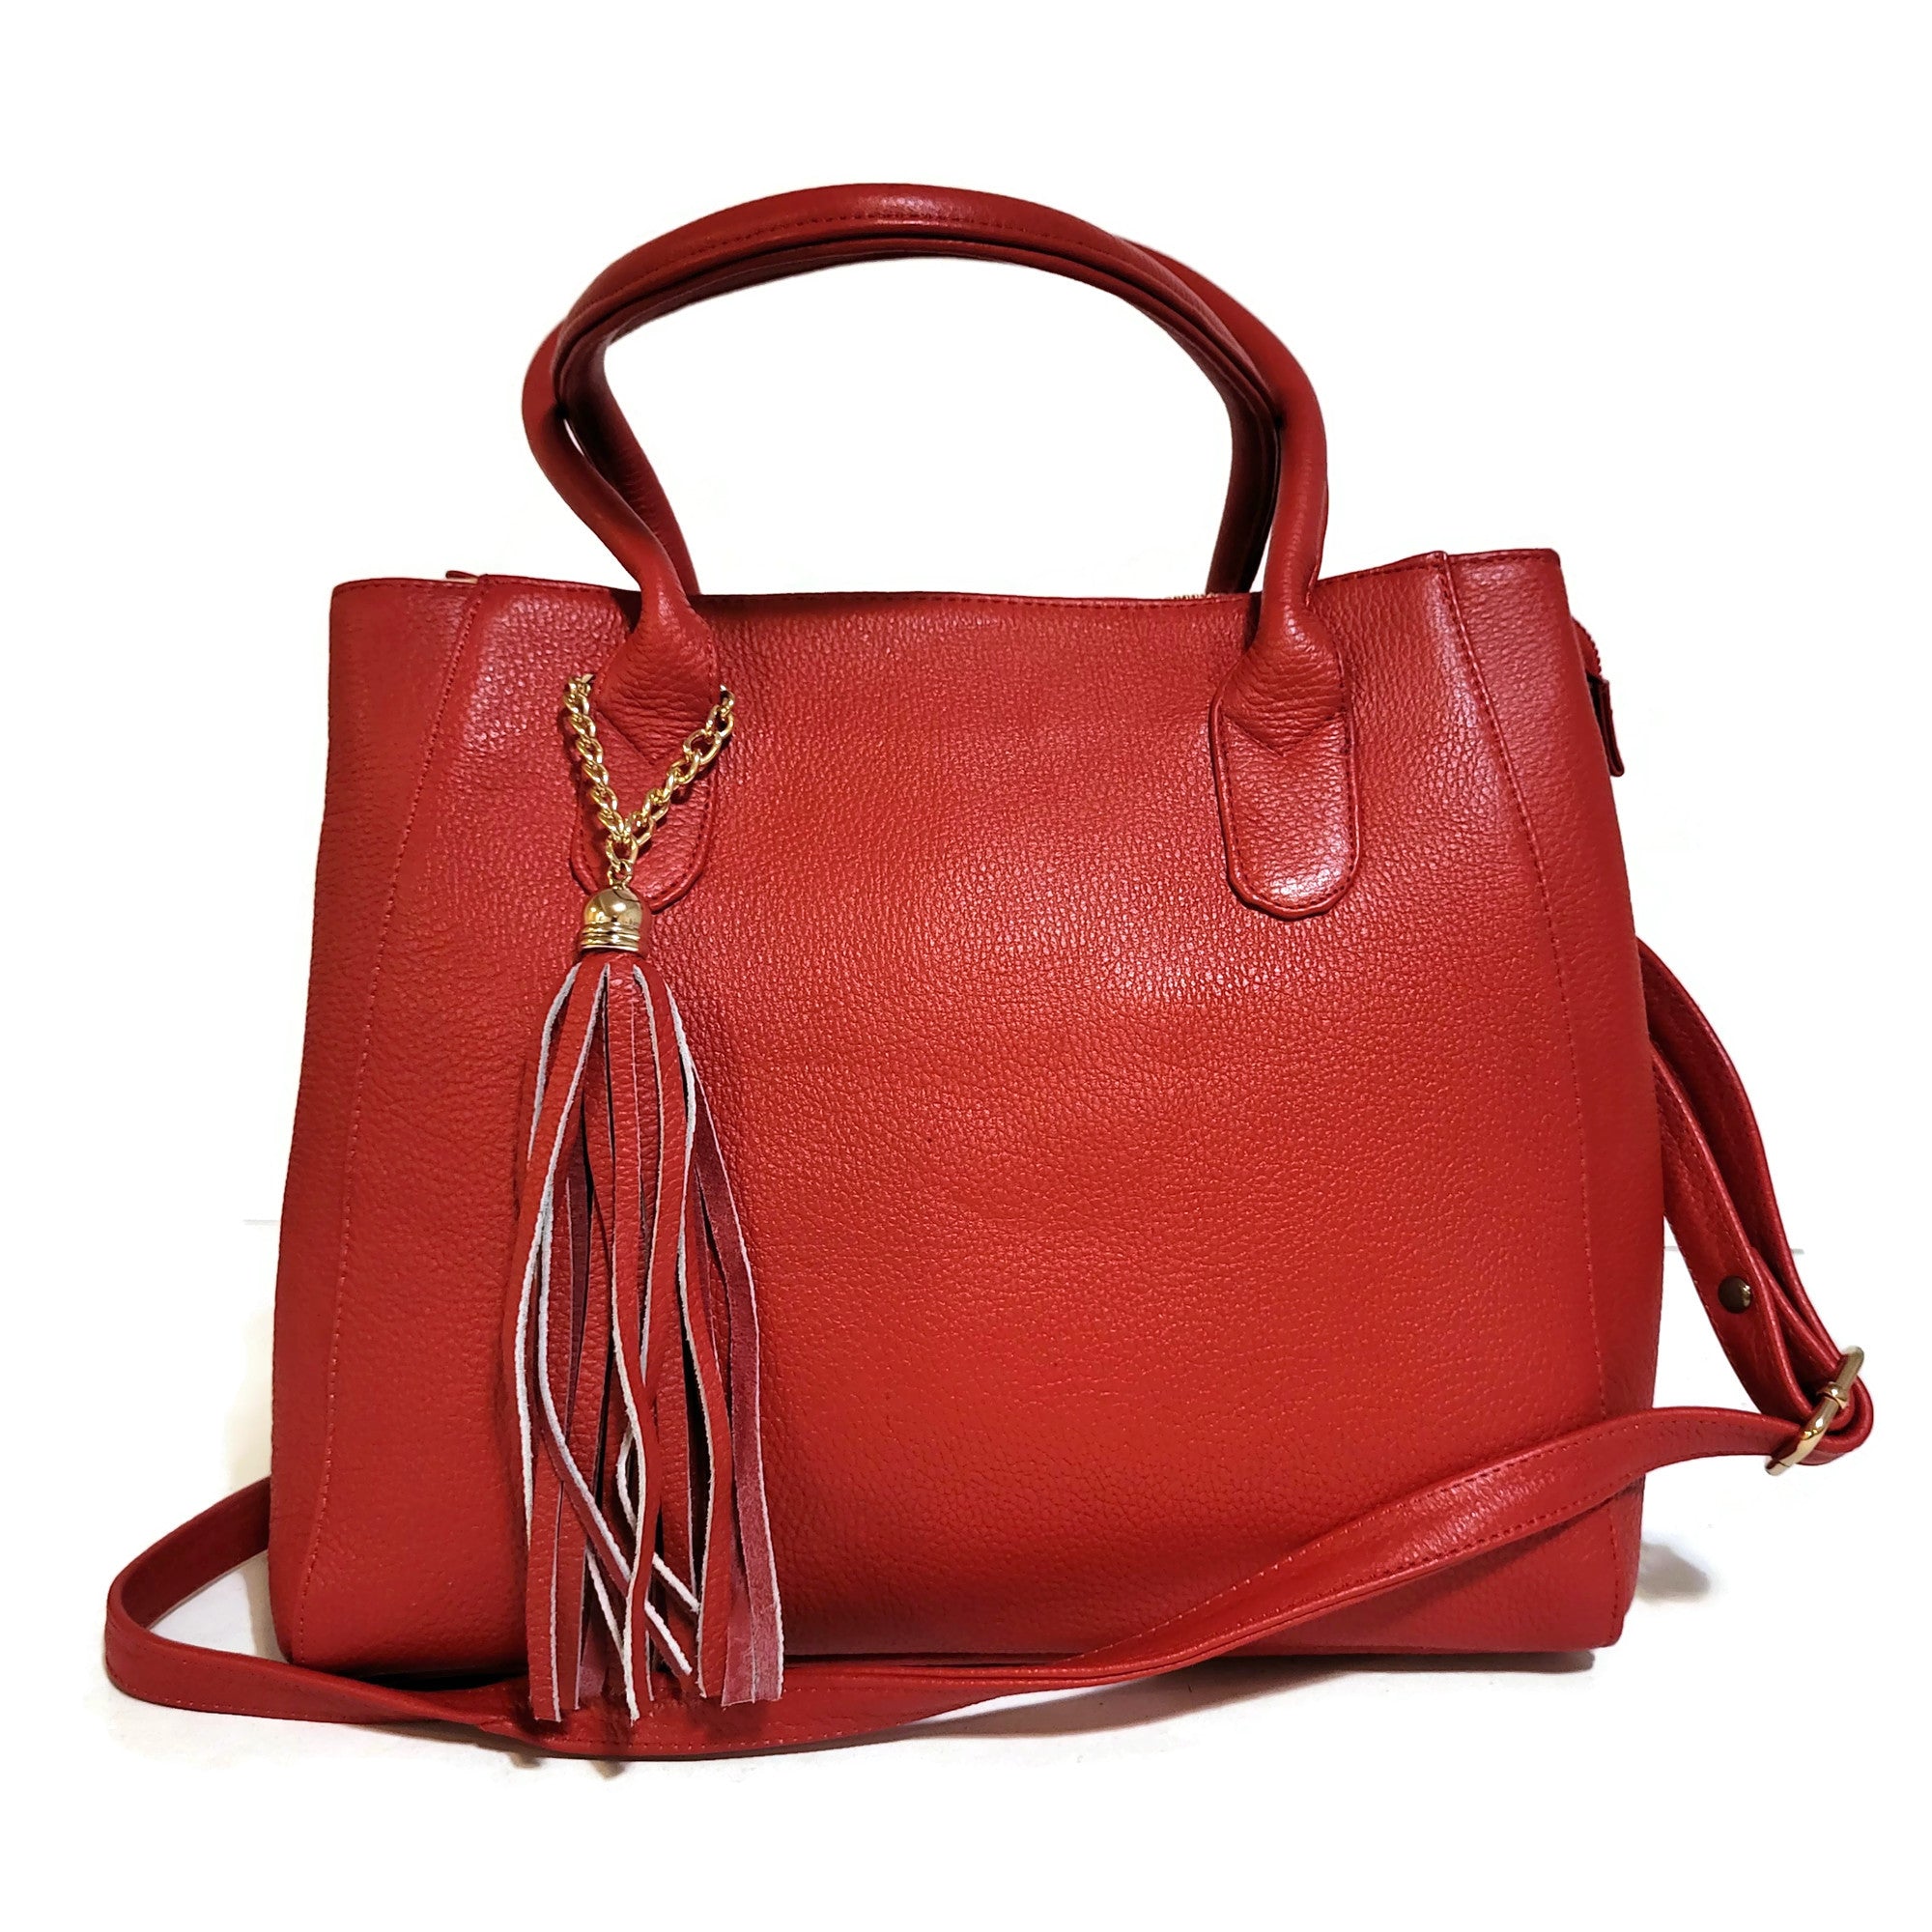 Red leather Bag for women, shoulder bag, women's  handbag, handmade leather  handbag